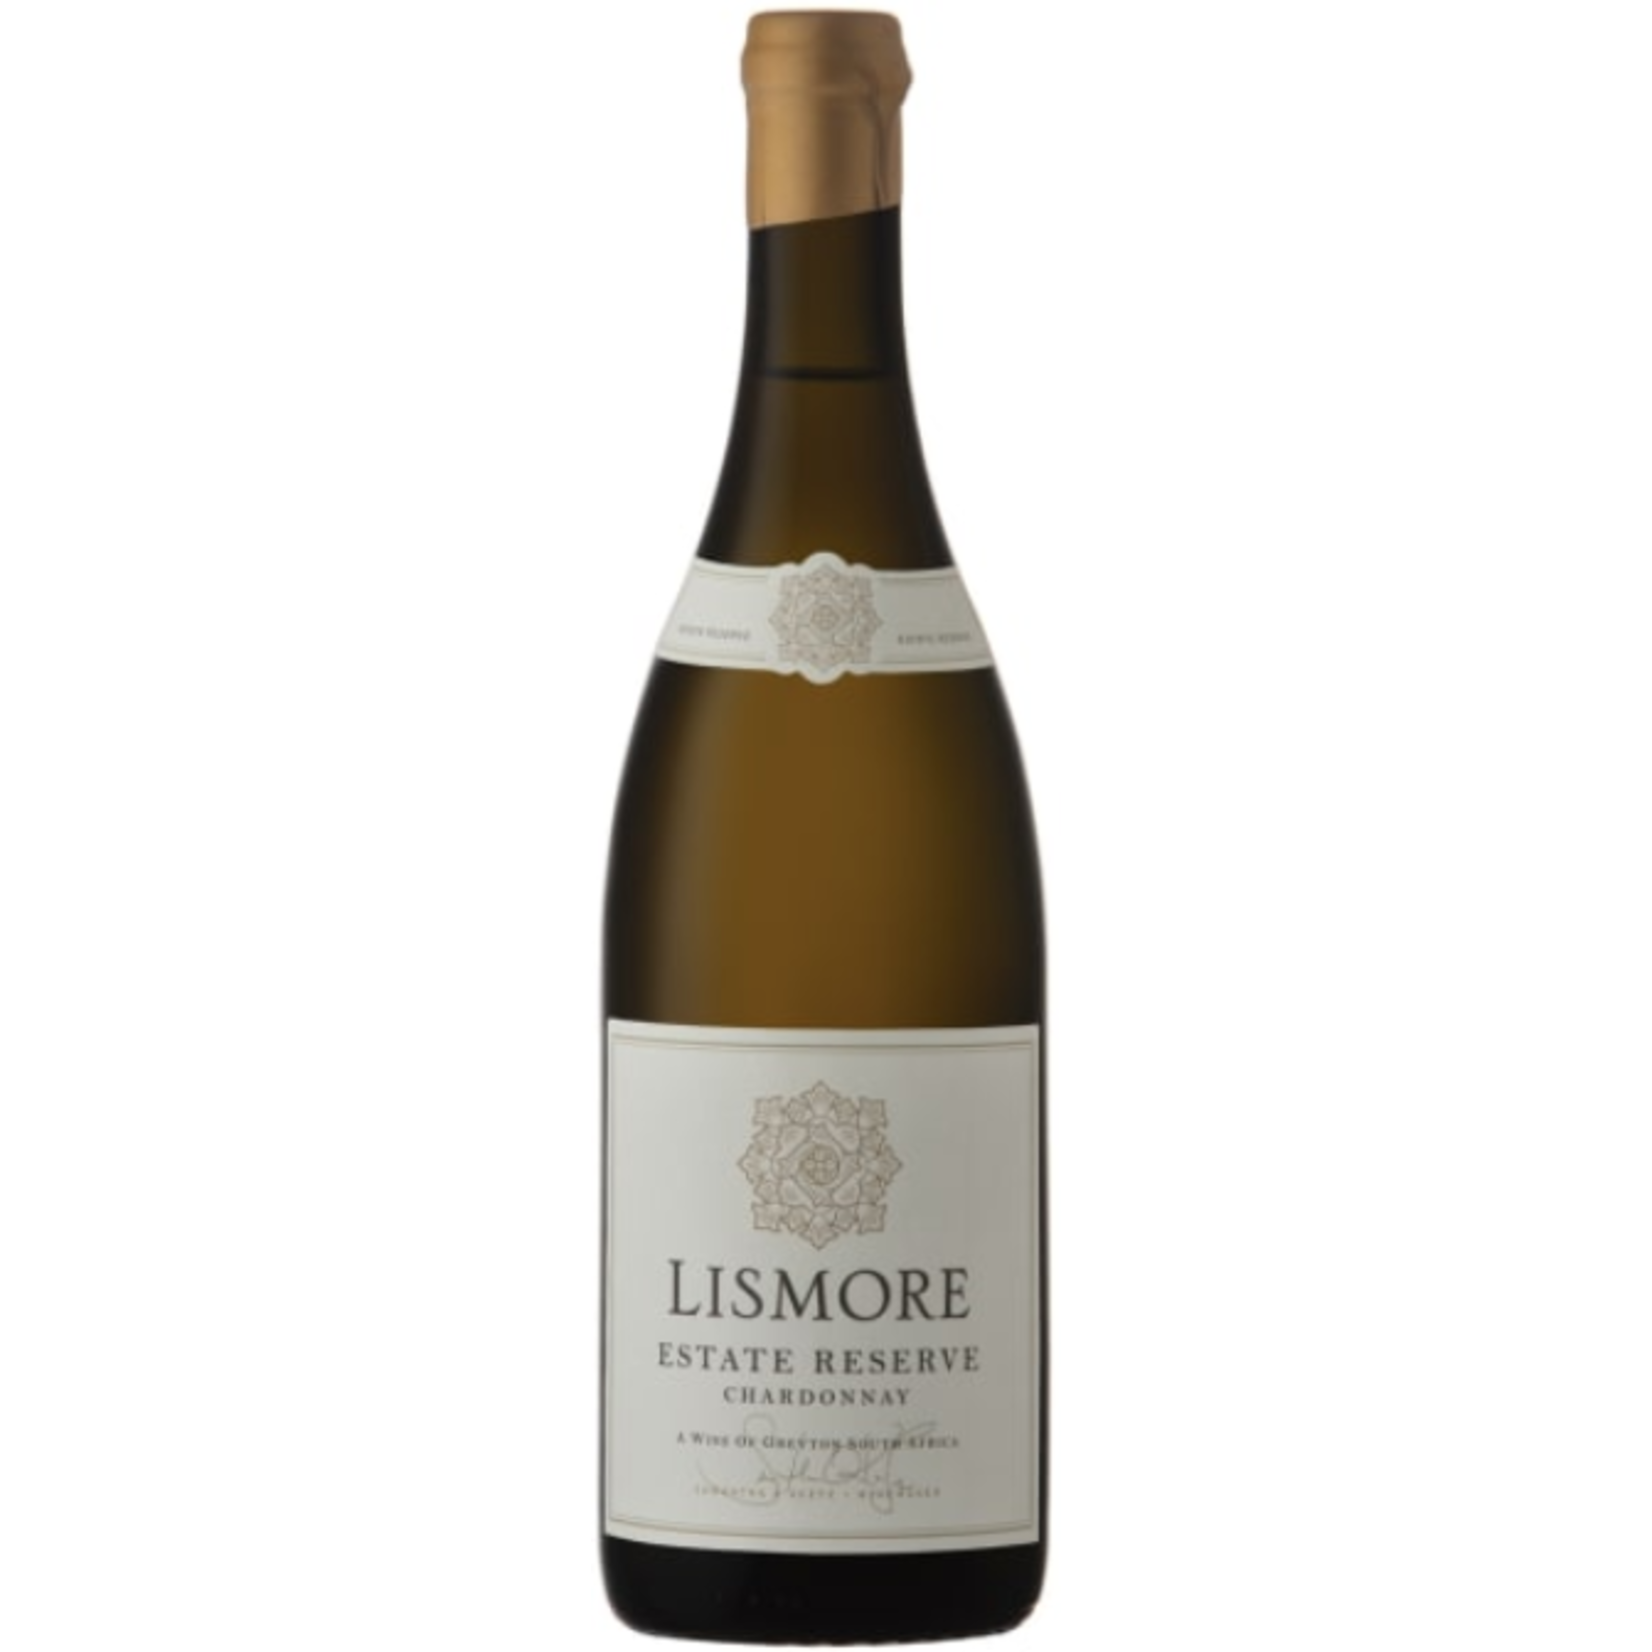 Lismore Estate Lismore Estate Reserve Chardonnay 2017  South Africa